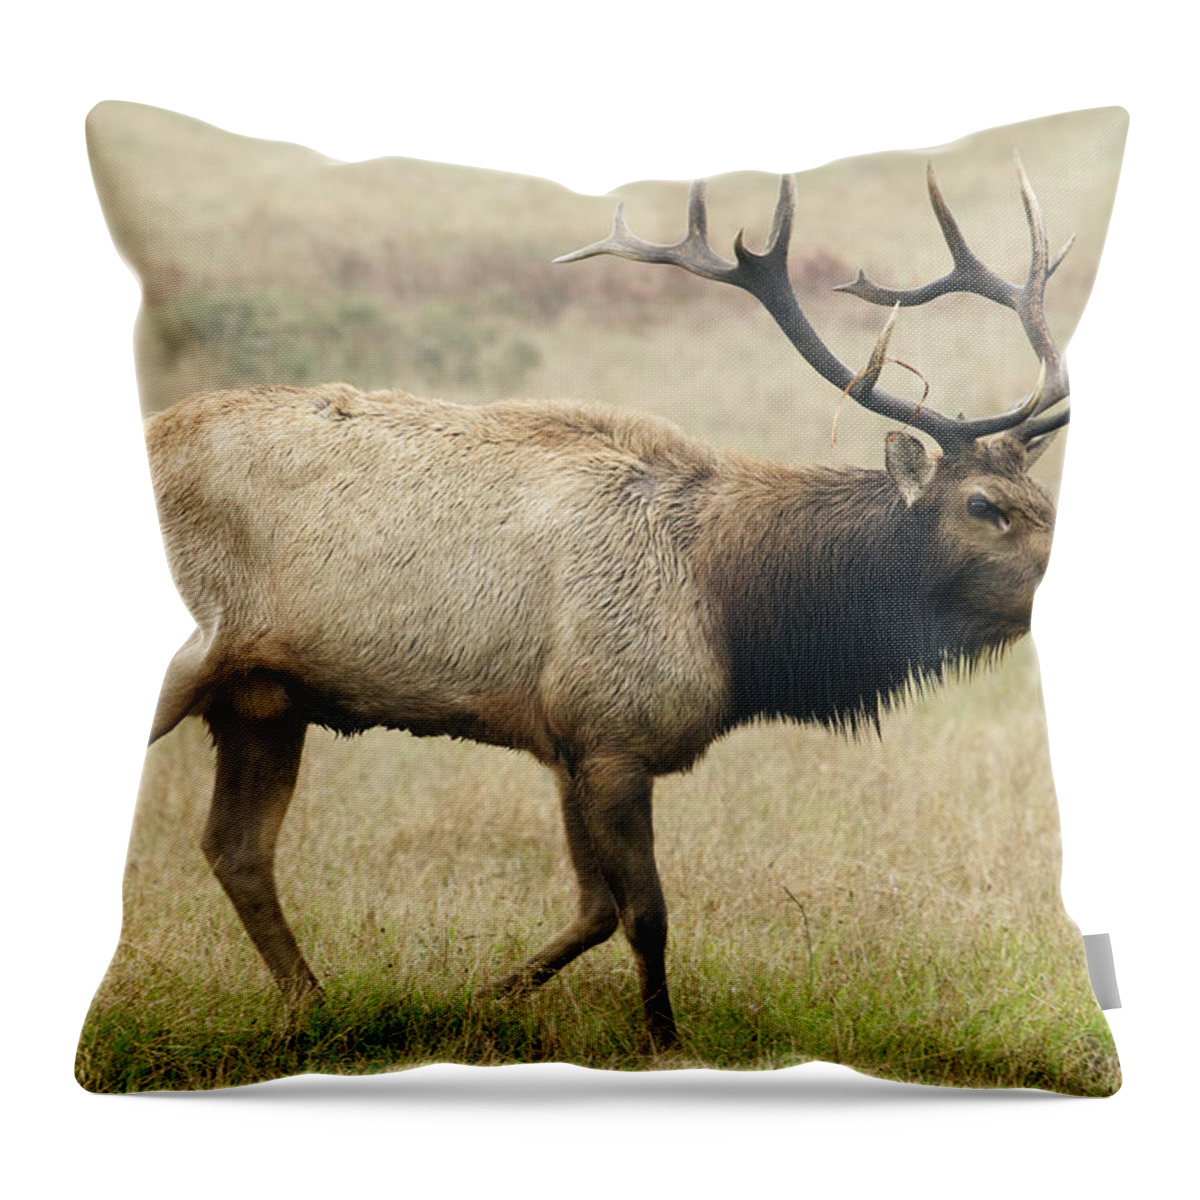 00499824 Throw Pillow featuring the photograph Tule Elk Bull Bugling During Rut Point by Sebastian Kennerknecht